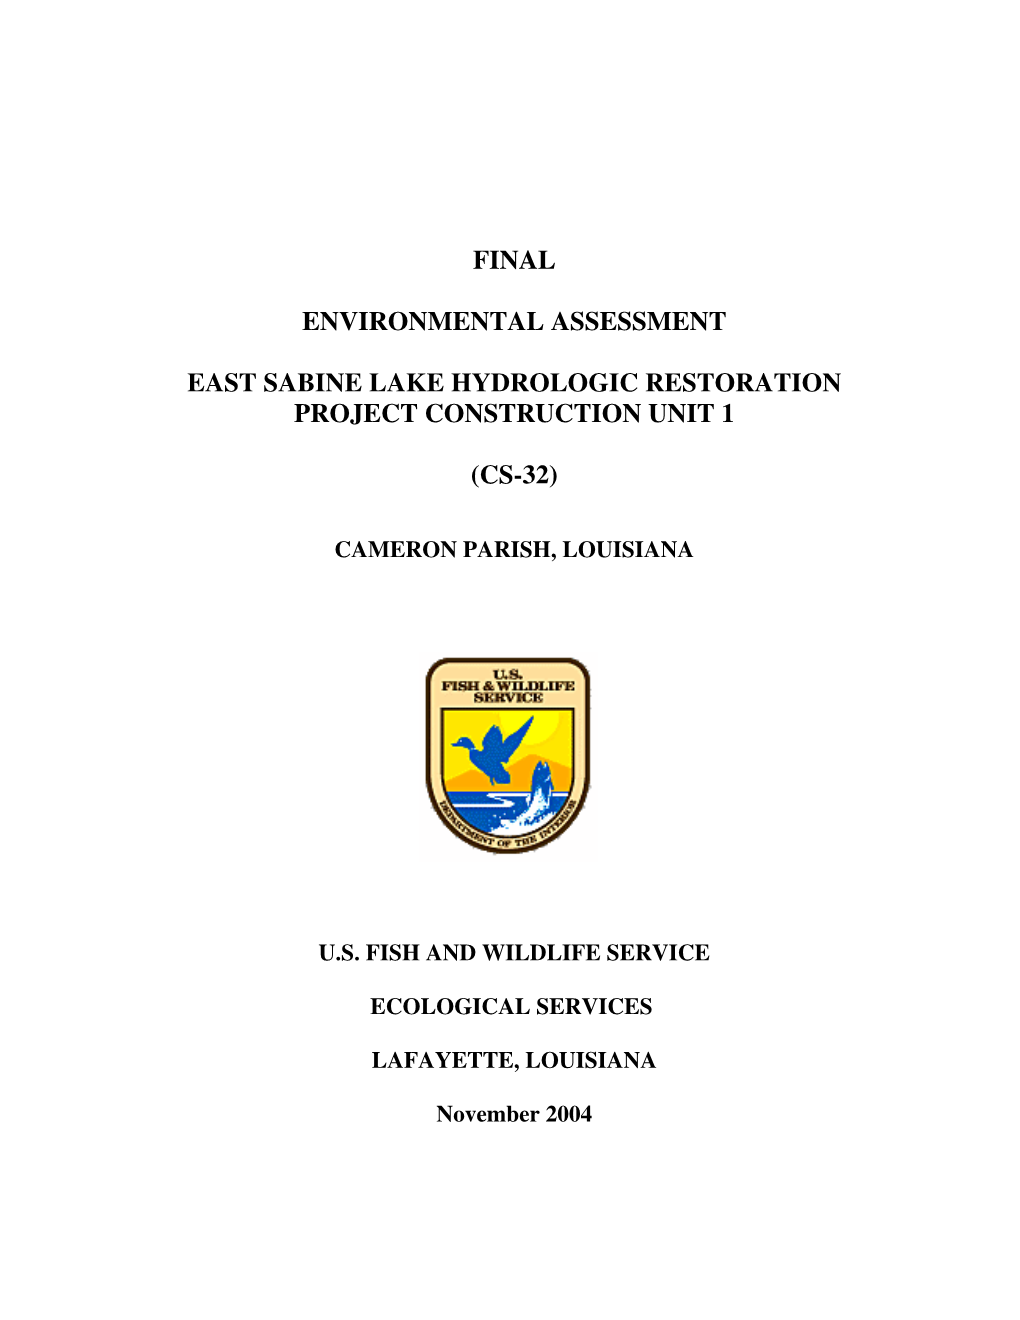 Final Environmental Assessment East Sabine Lake Hydrologic Restoration Project Construction Unit 1